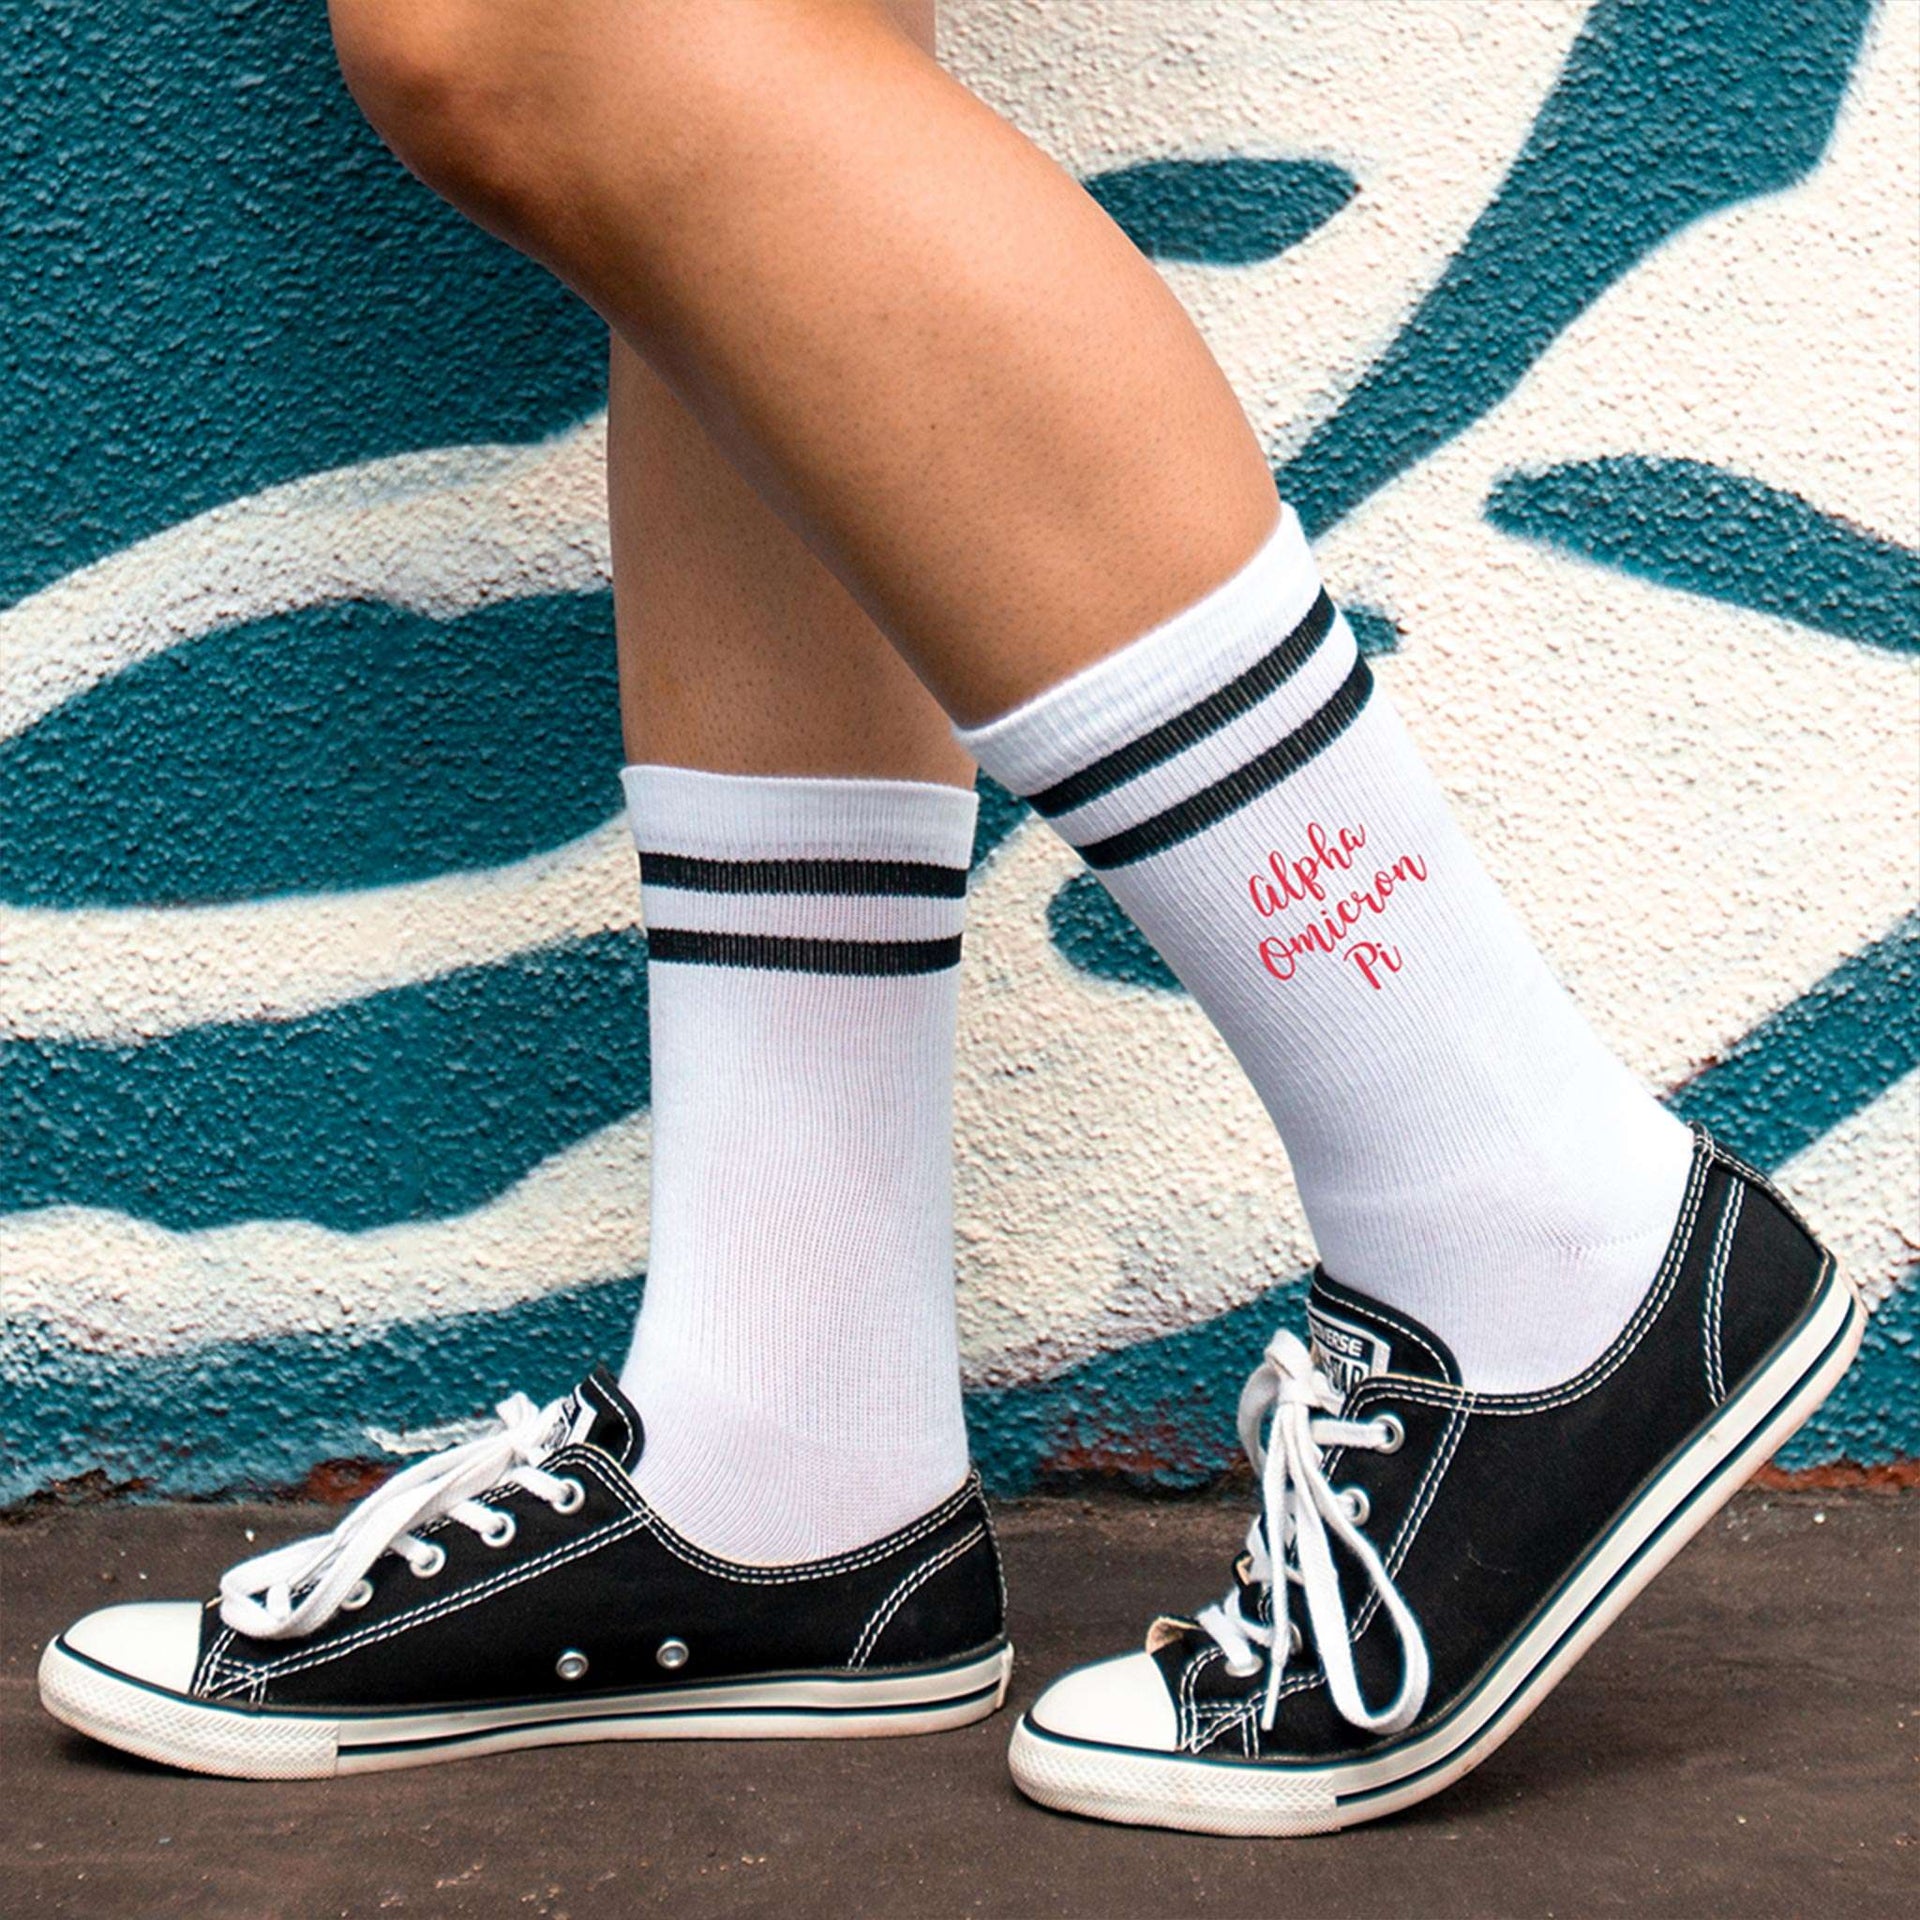 Alpha Omicron Pi sorority name custom printed on black striped crew socks